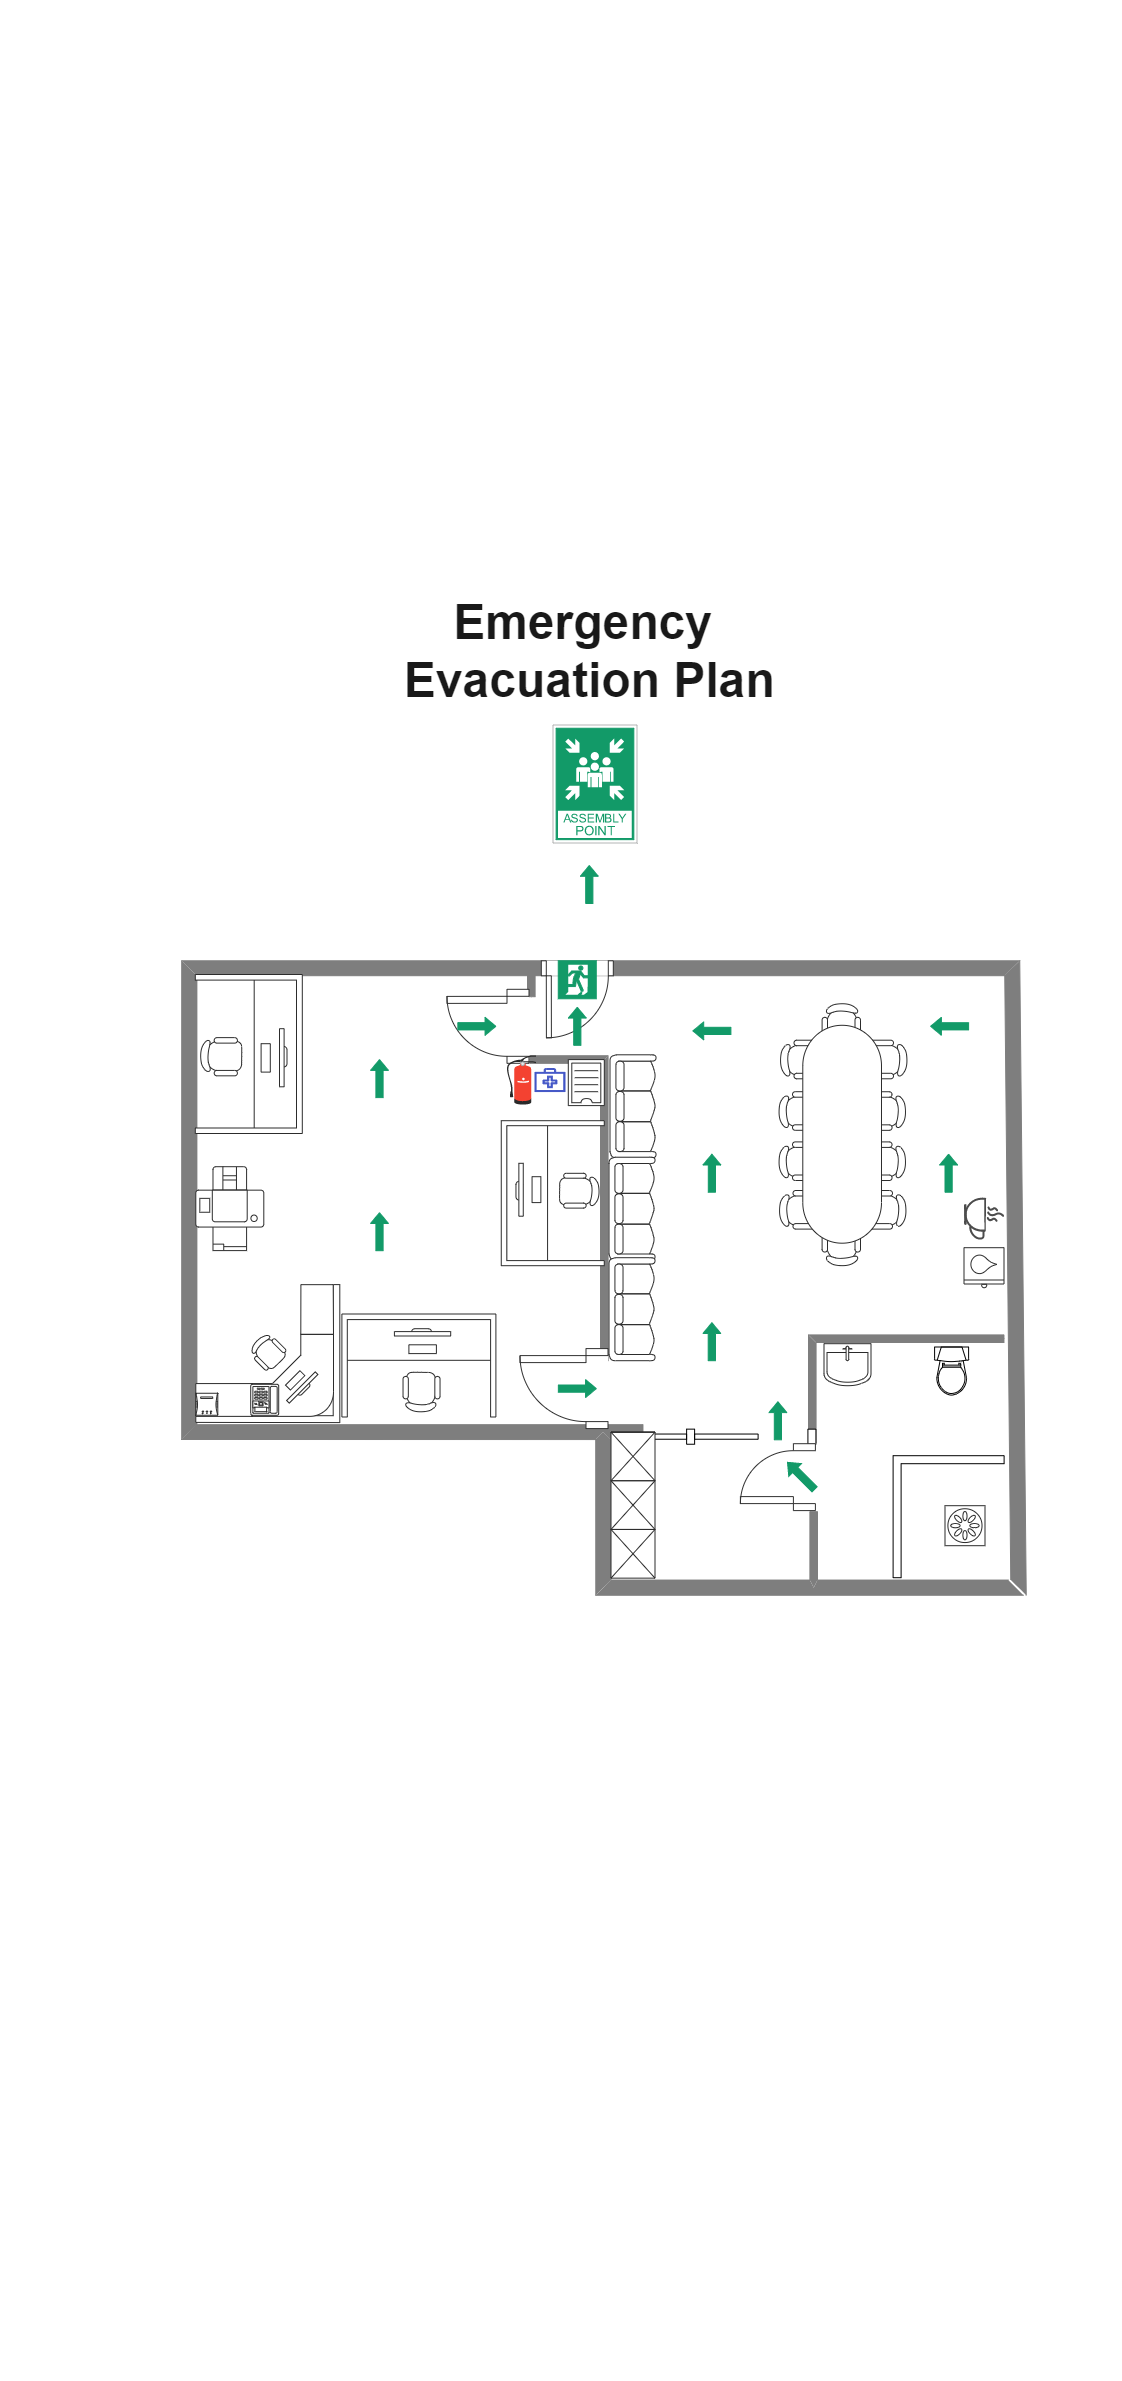 Simple Emergency Evacuation Plan